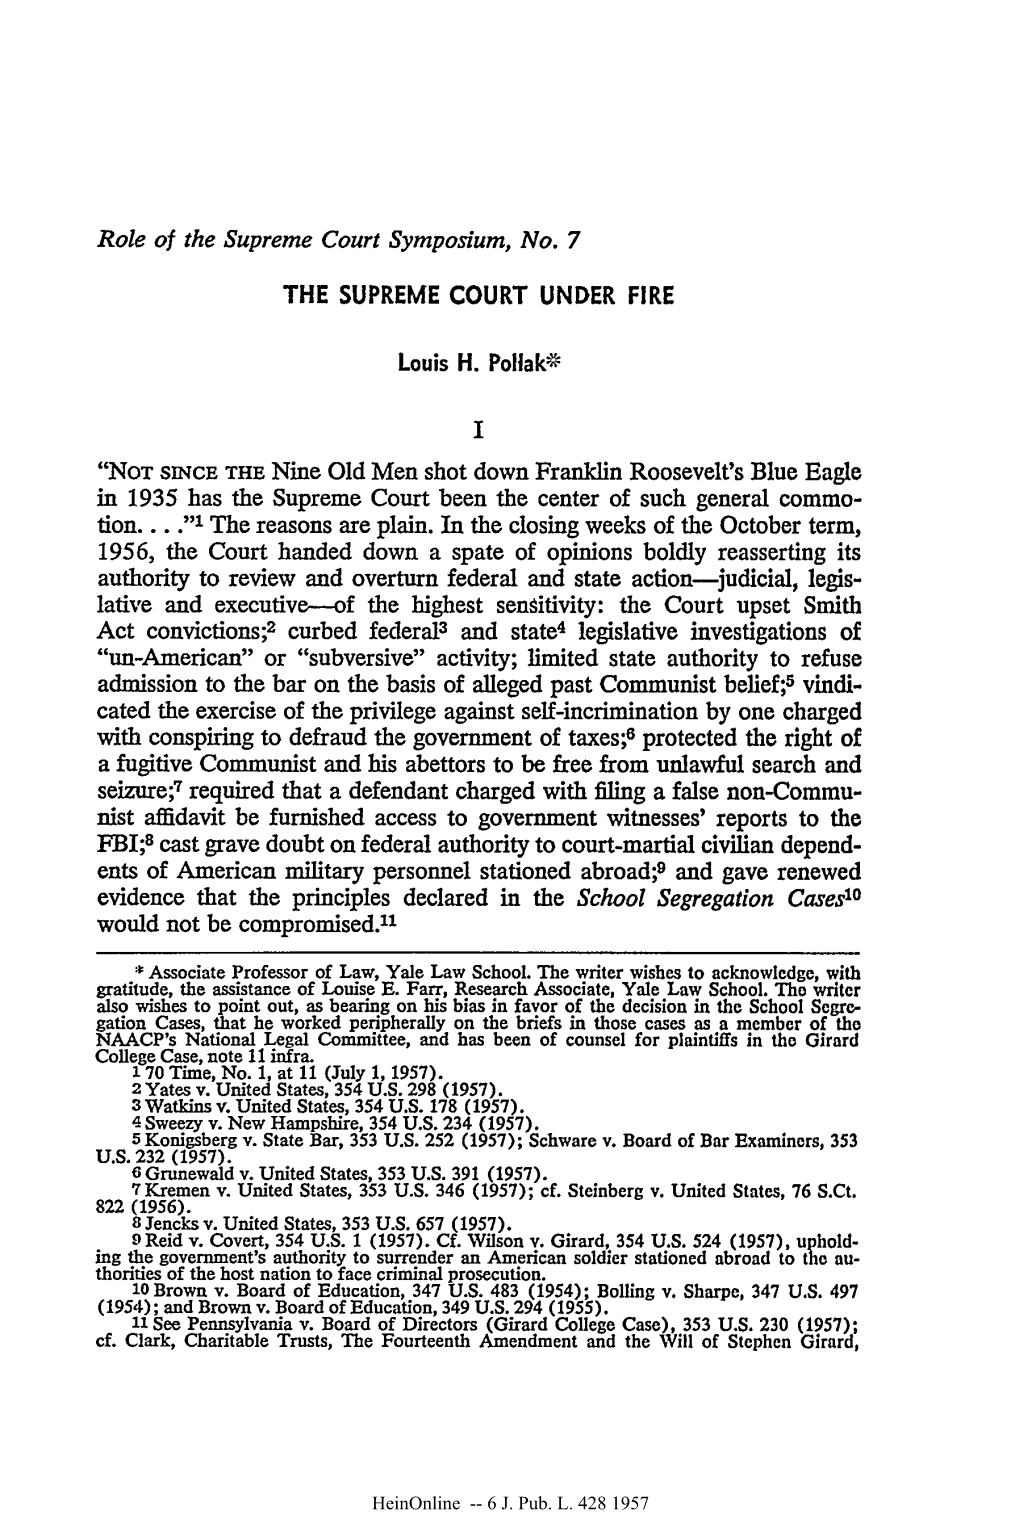 THE SUPREME COURT UNDER FIRE Louis H. Pollak